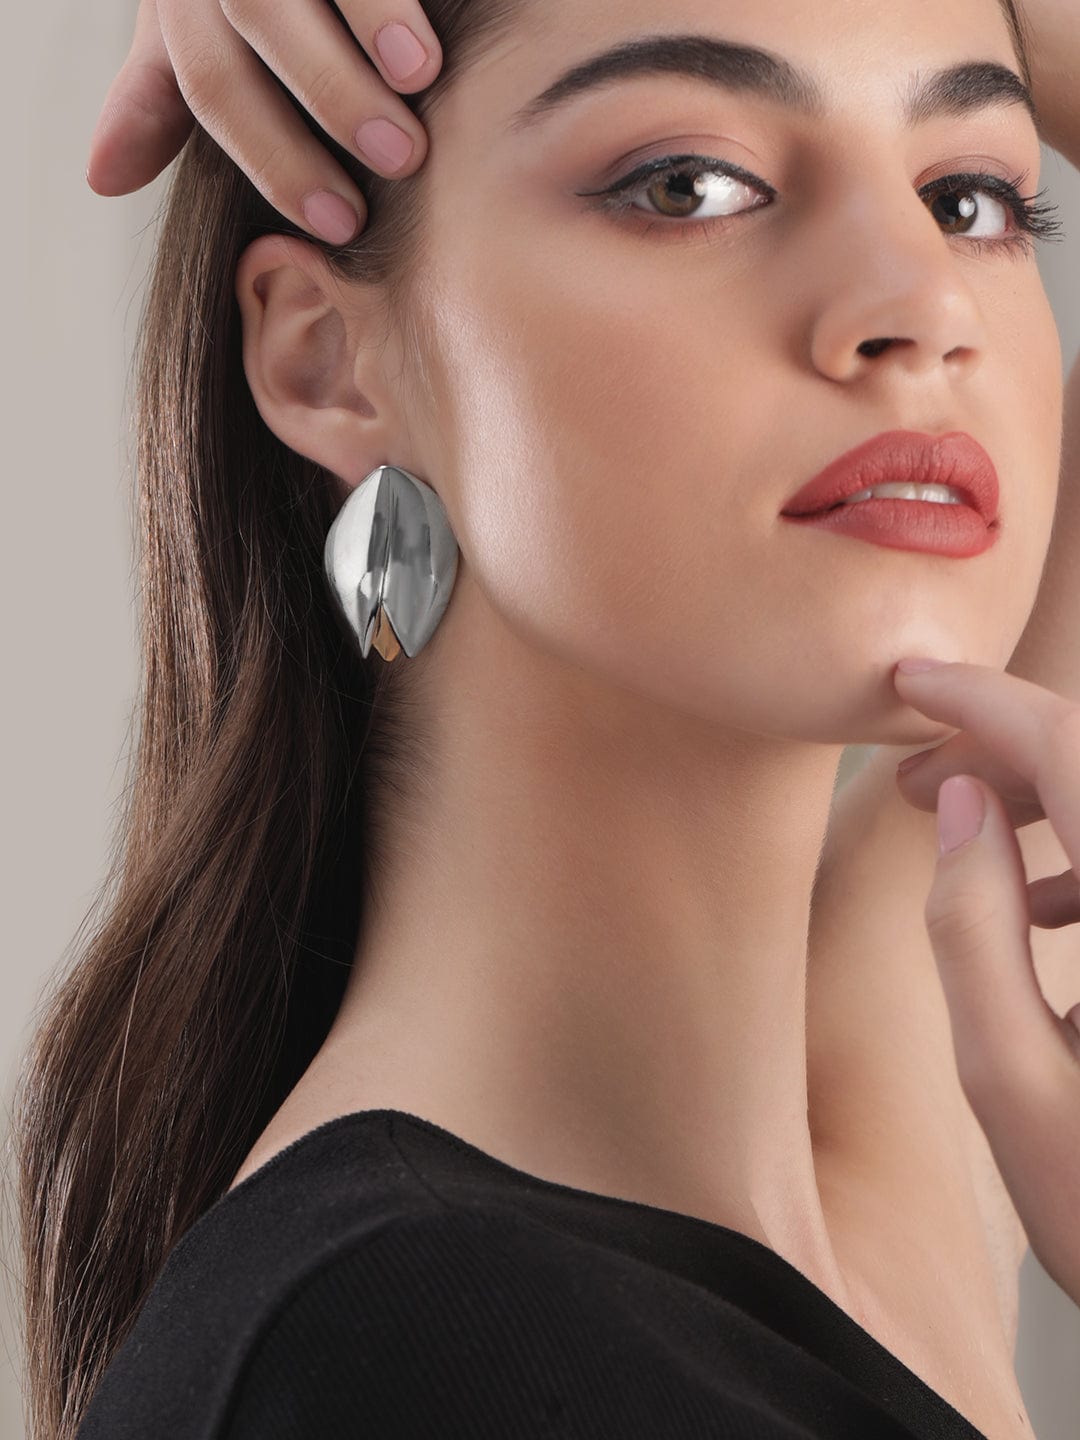 Rubans Voguish Nature's Whispers: Silver Tone Leaf Pattern Earrings Earrings